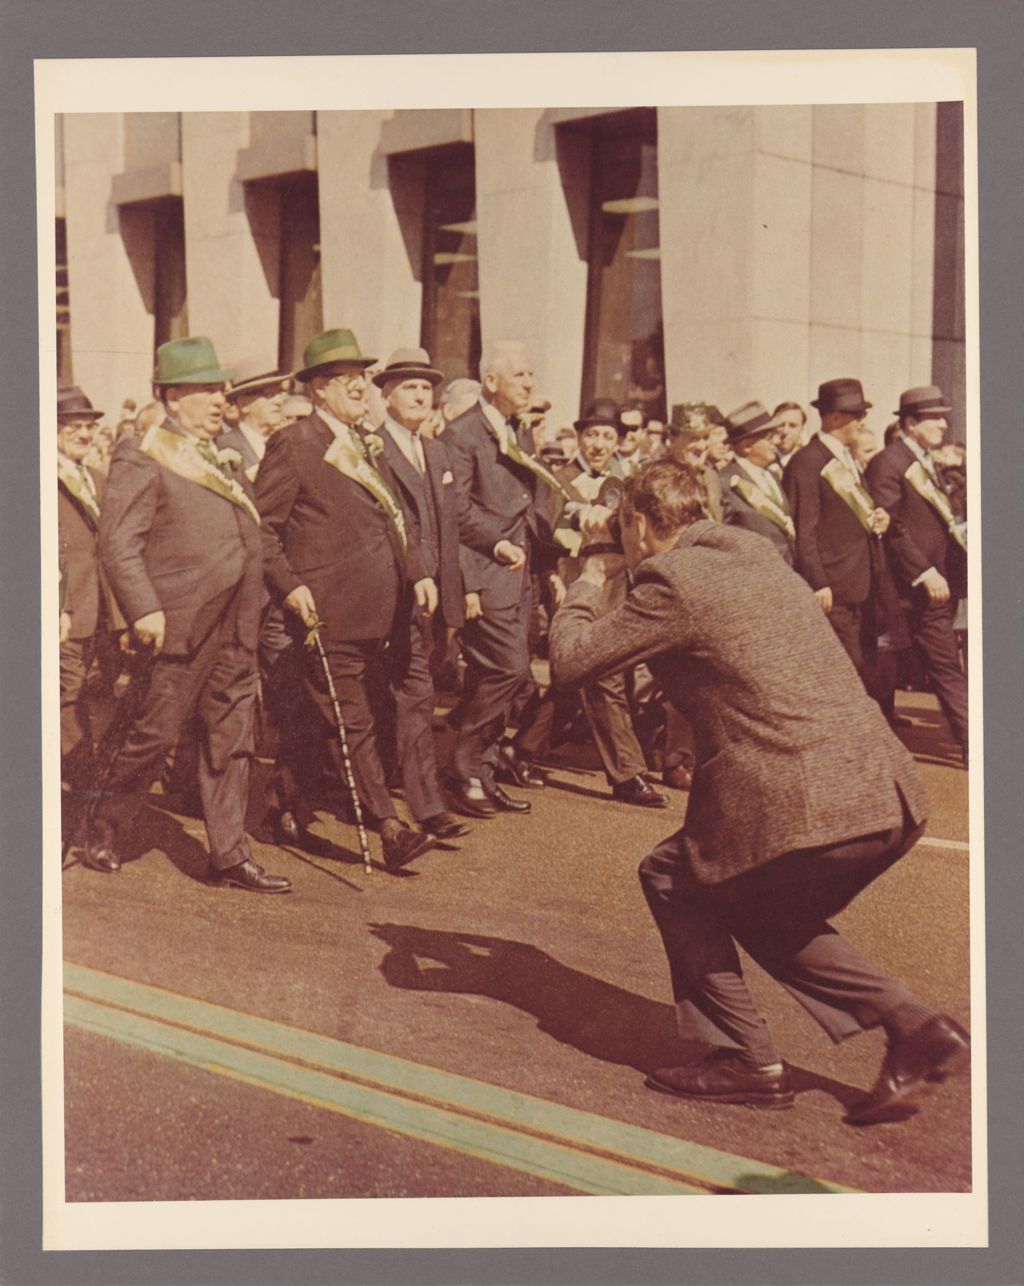 Miniature of Richard J. Daley leading a St. Patrick's Day parade